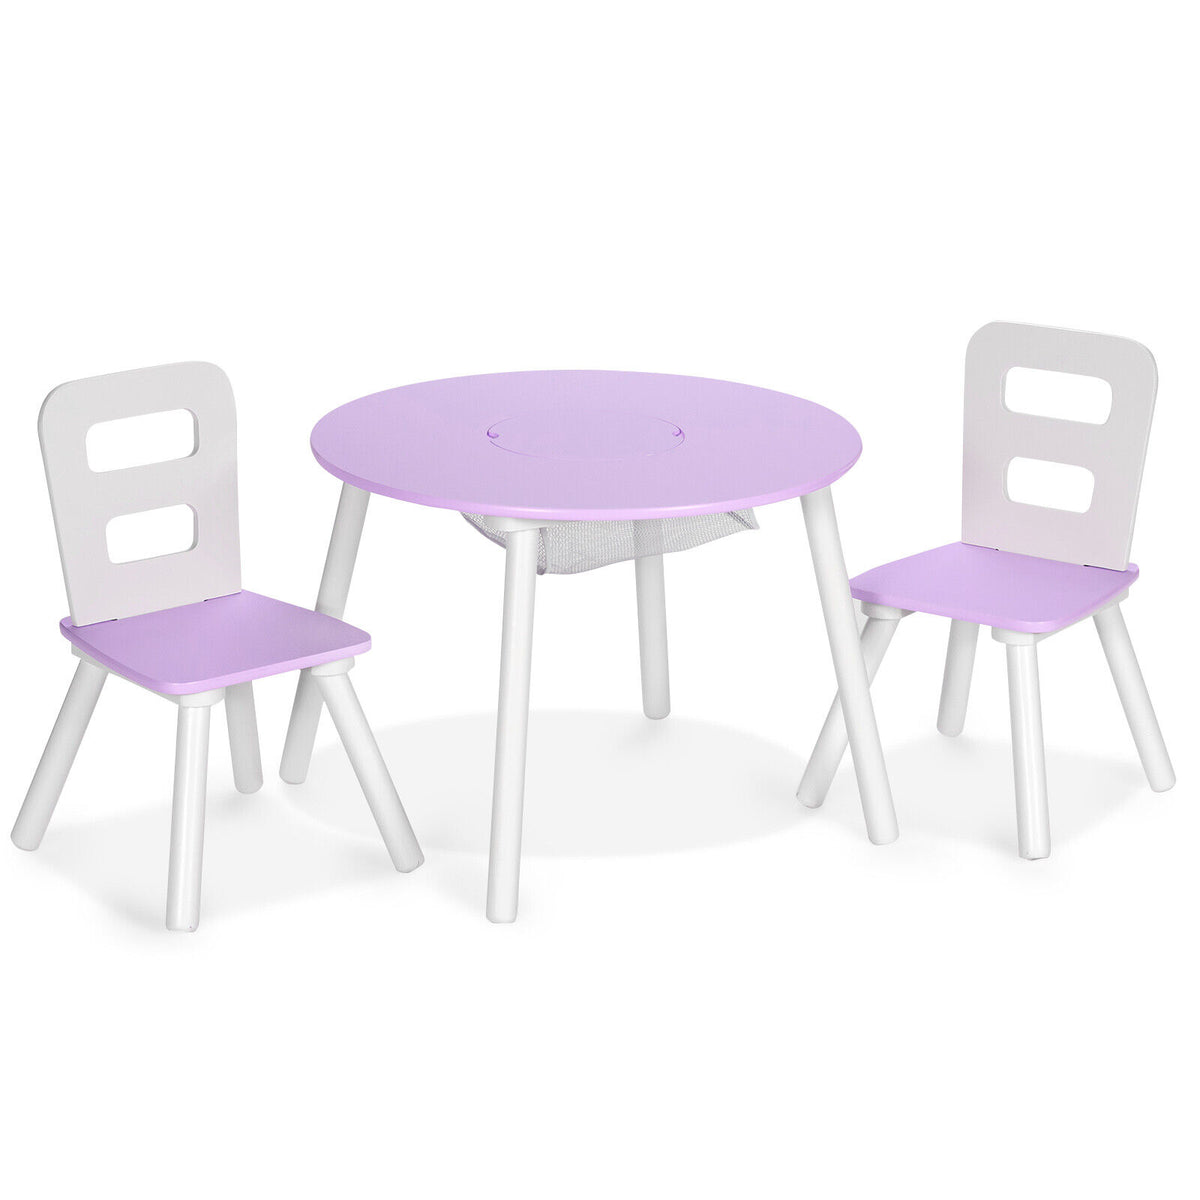 Kids Wooden Round Table & 2 Chair Set with Center Mesh Storage